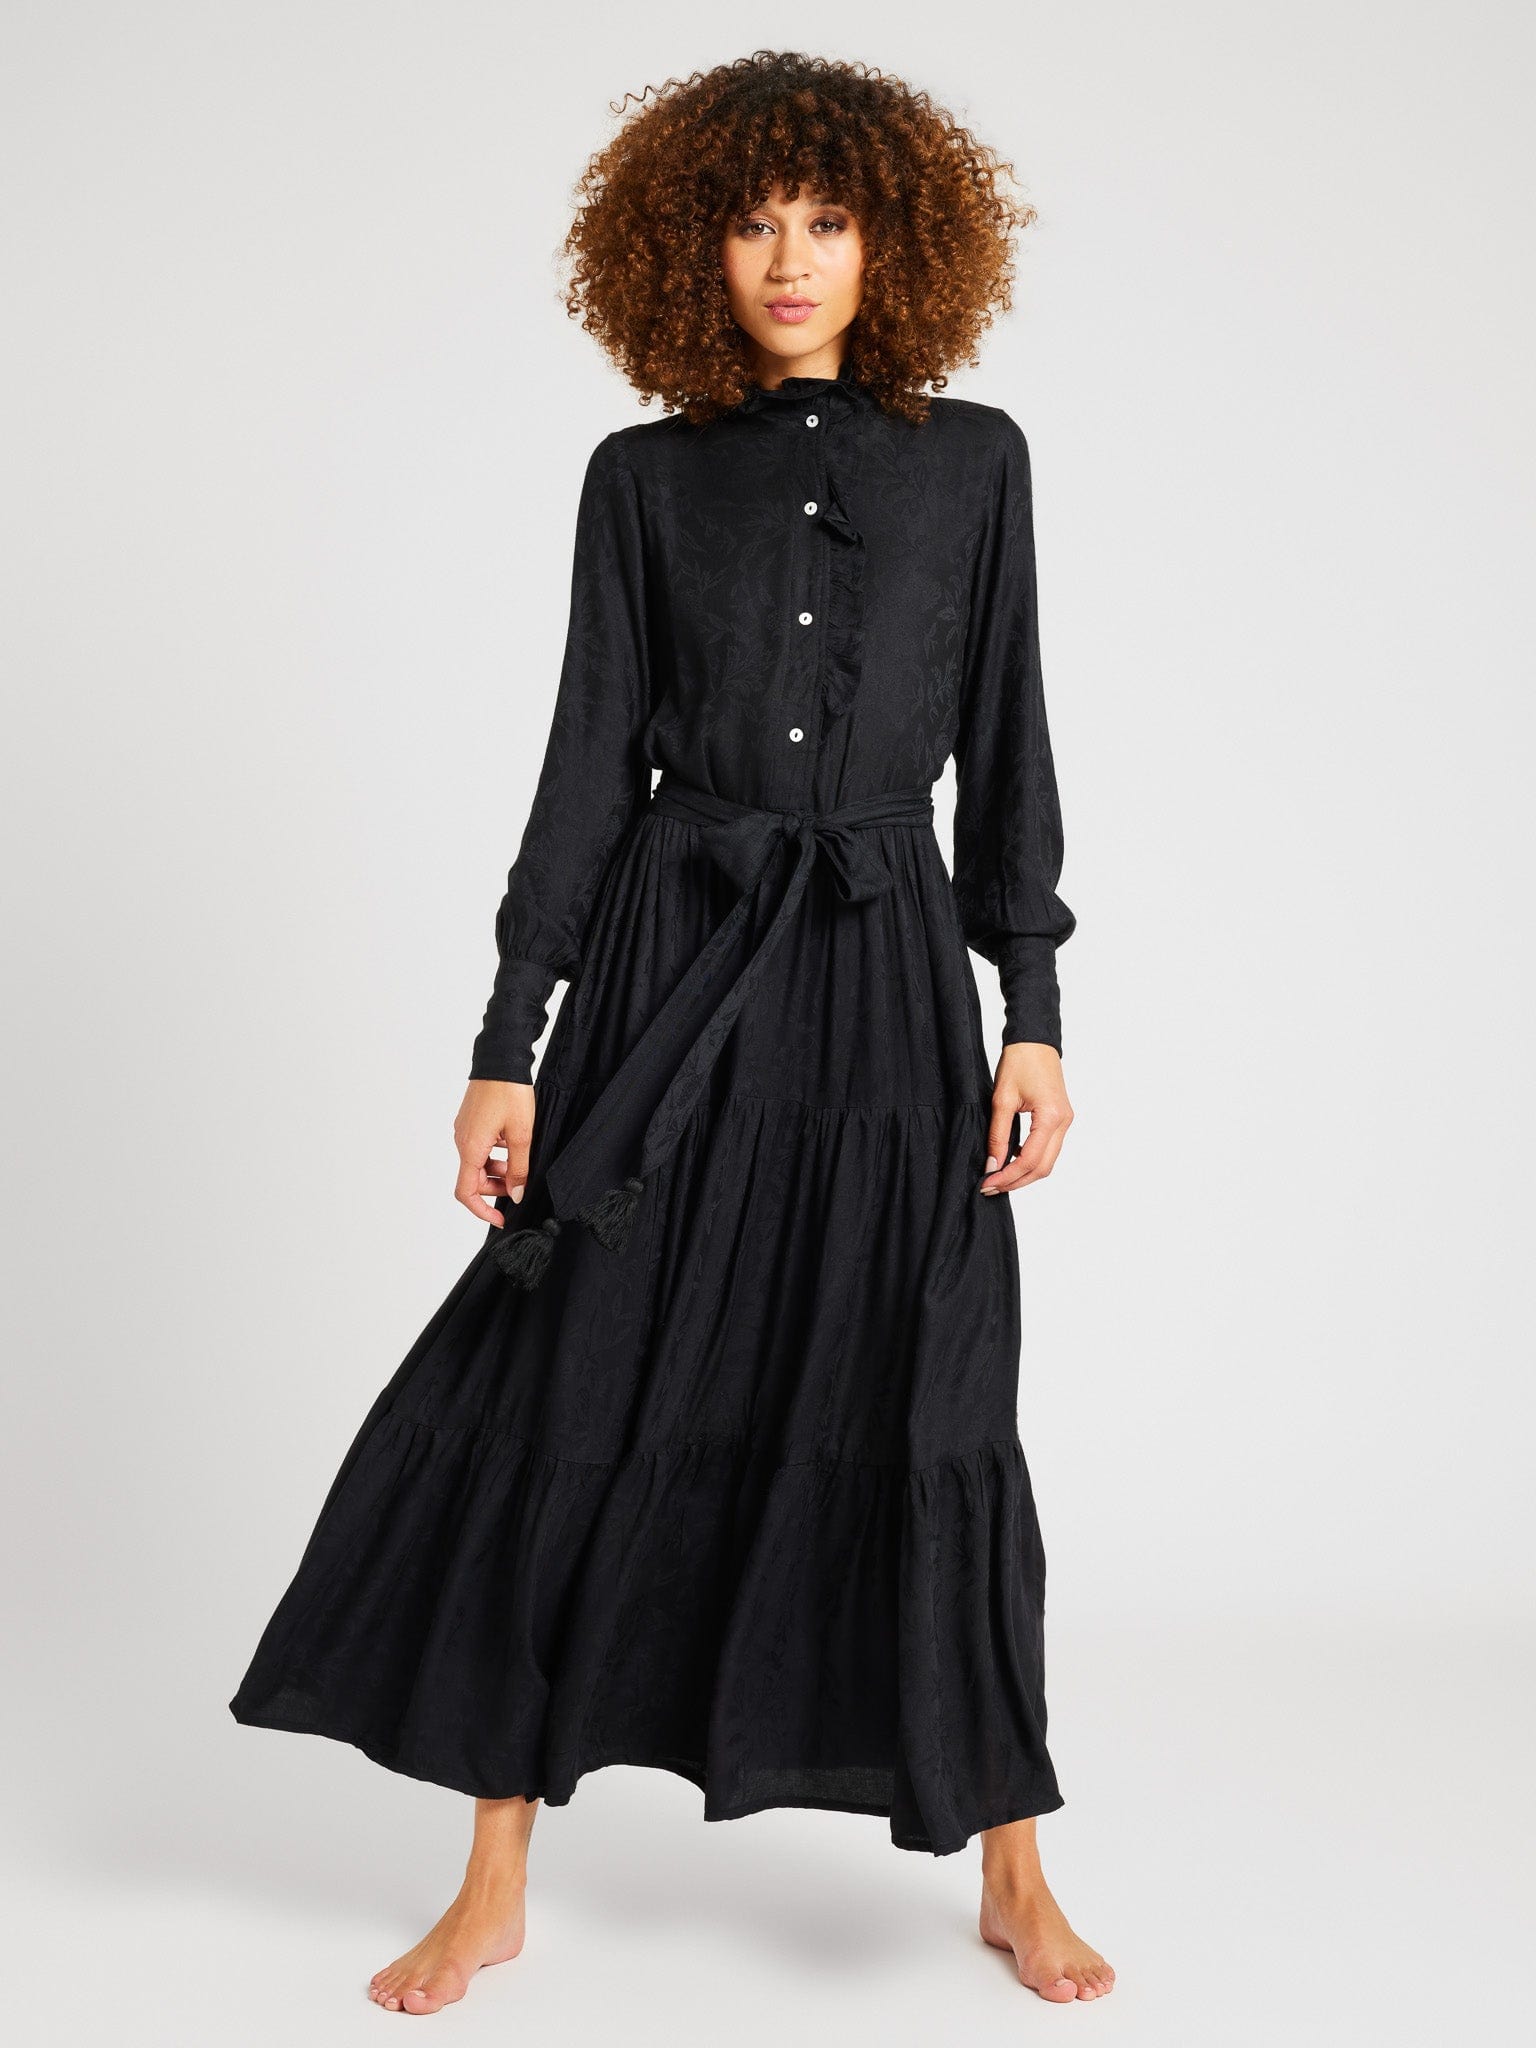 MILLE Clothing Valentina Dress in Black Jacquard